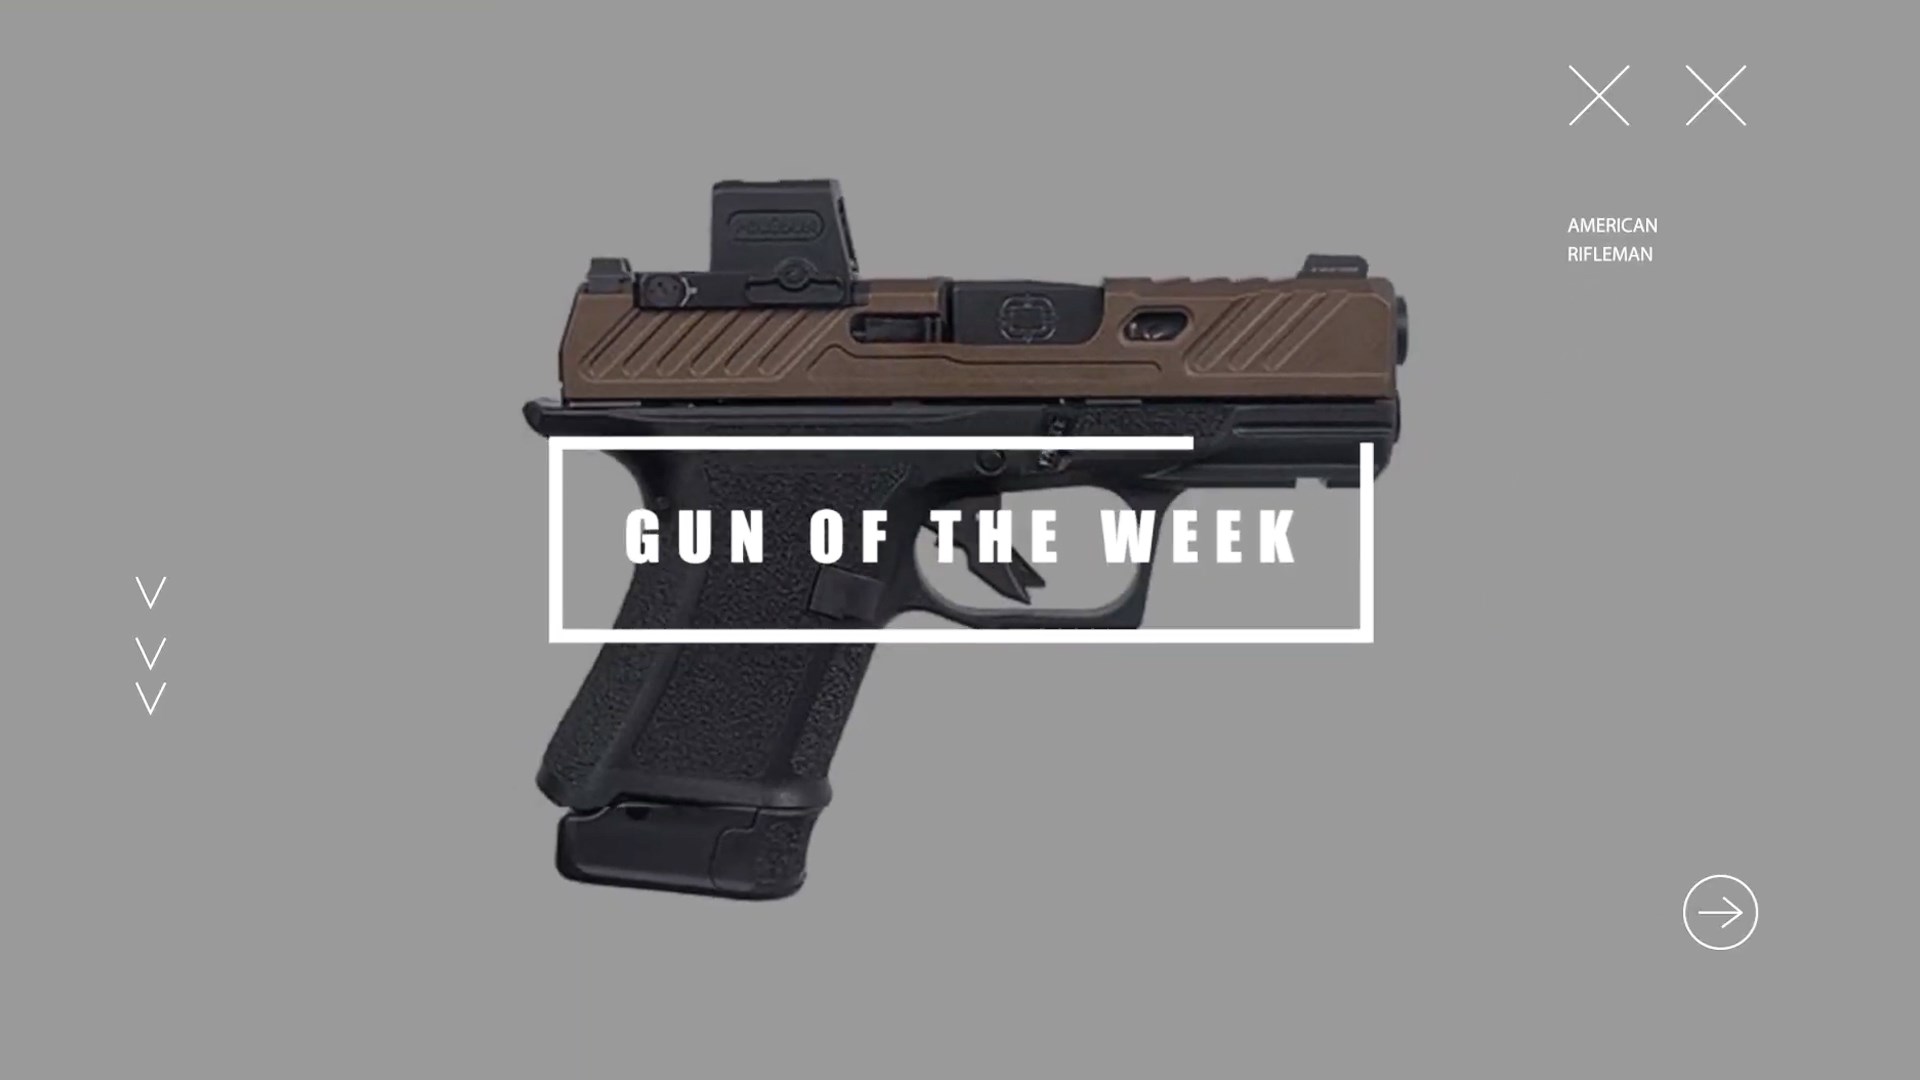 GUN OF THE WEEK AMERICAN RIFLEMAN XX ARROW title screen text overlay box gun right-side view of shadow systems cr920 elite pistol